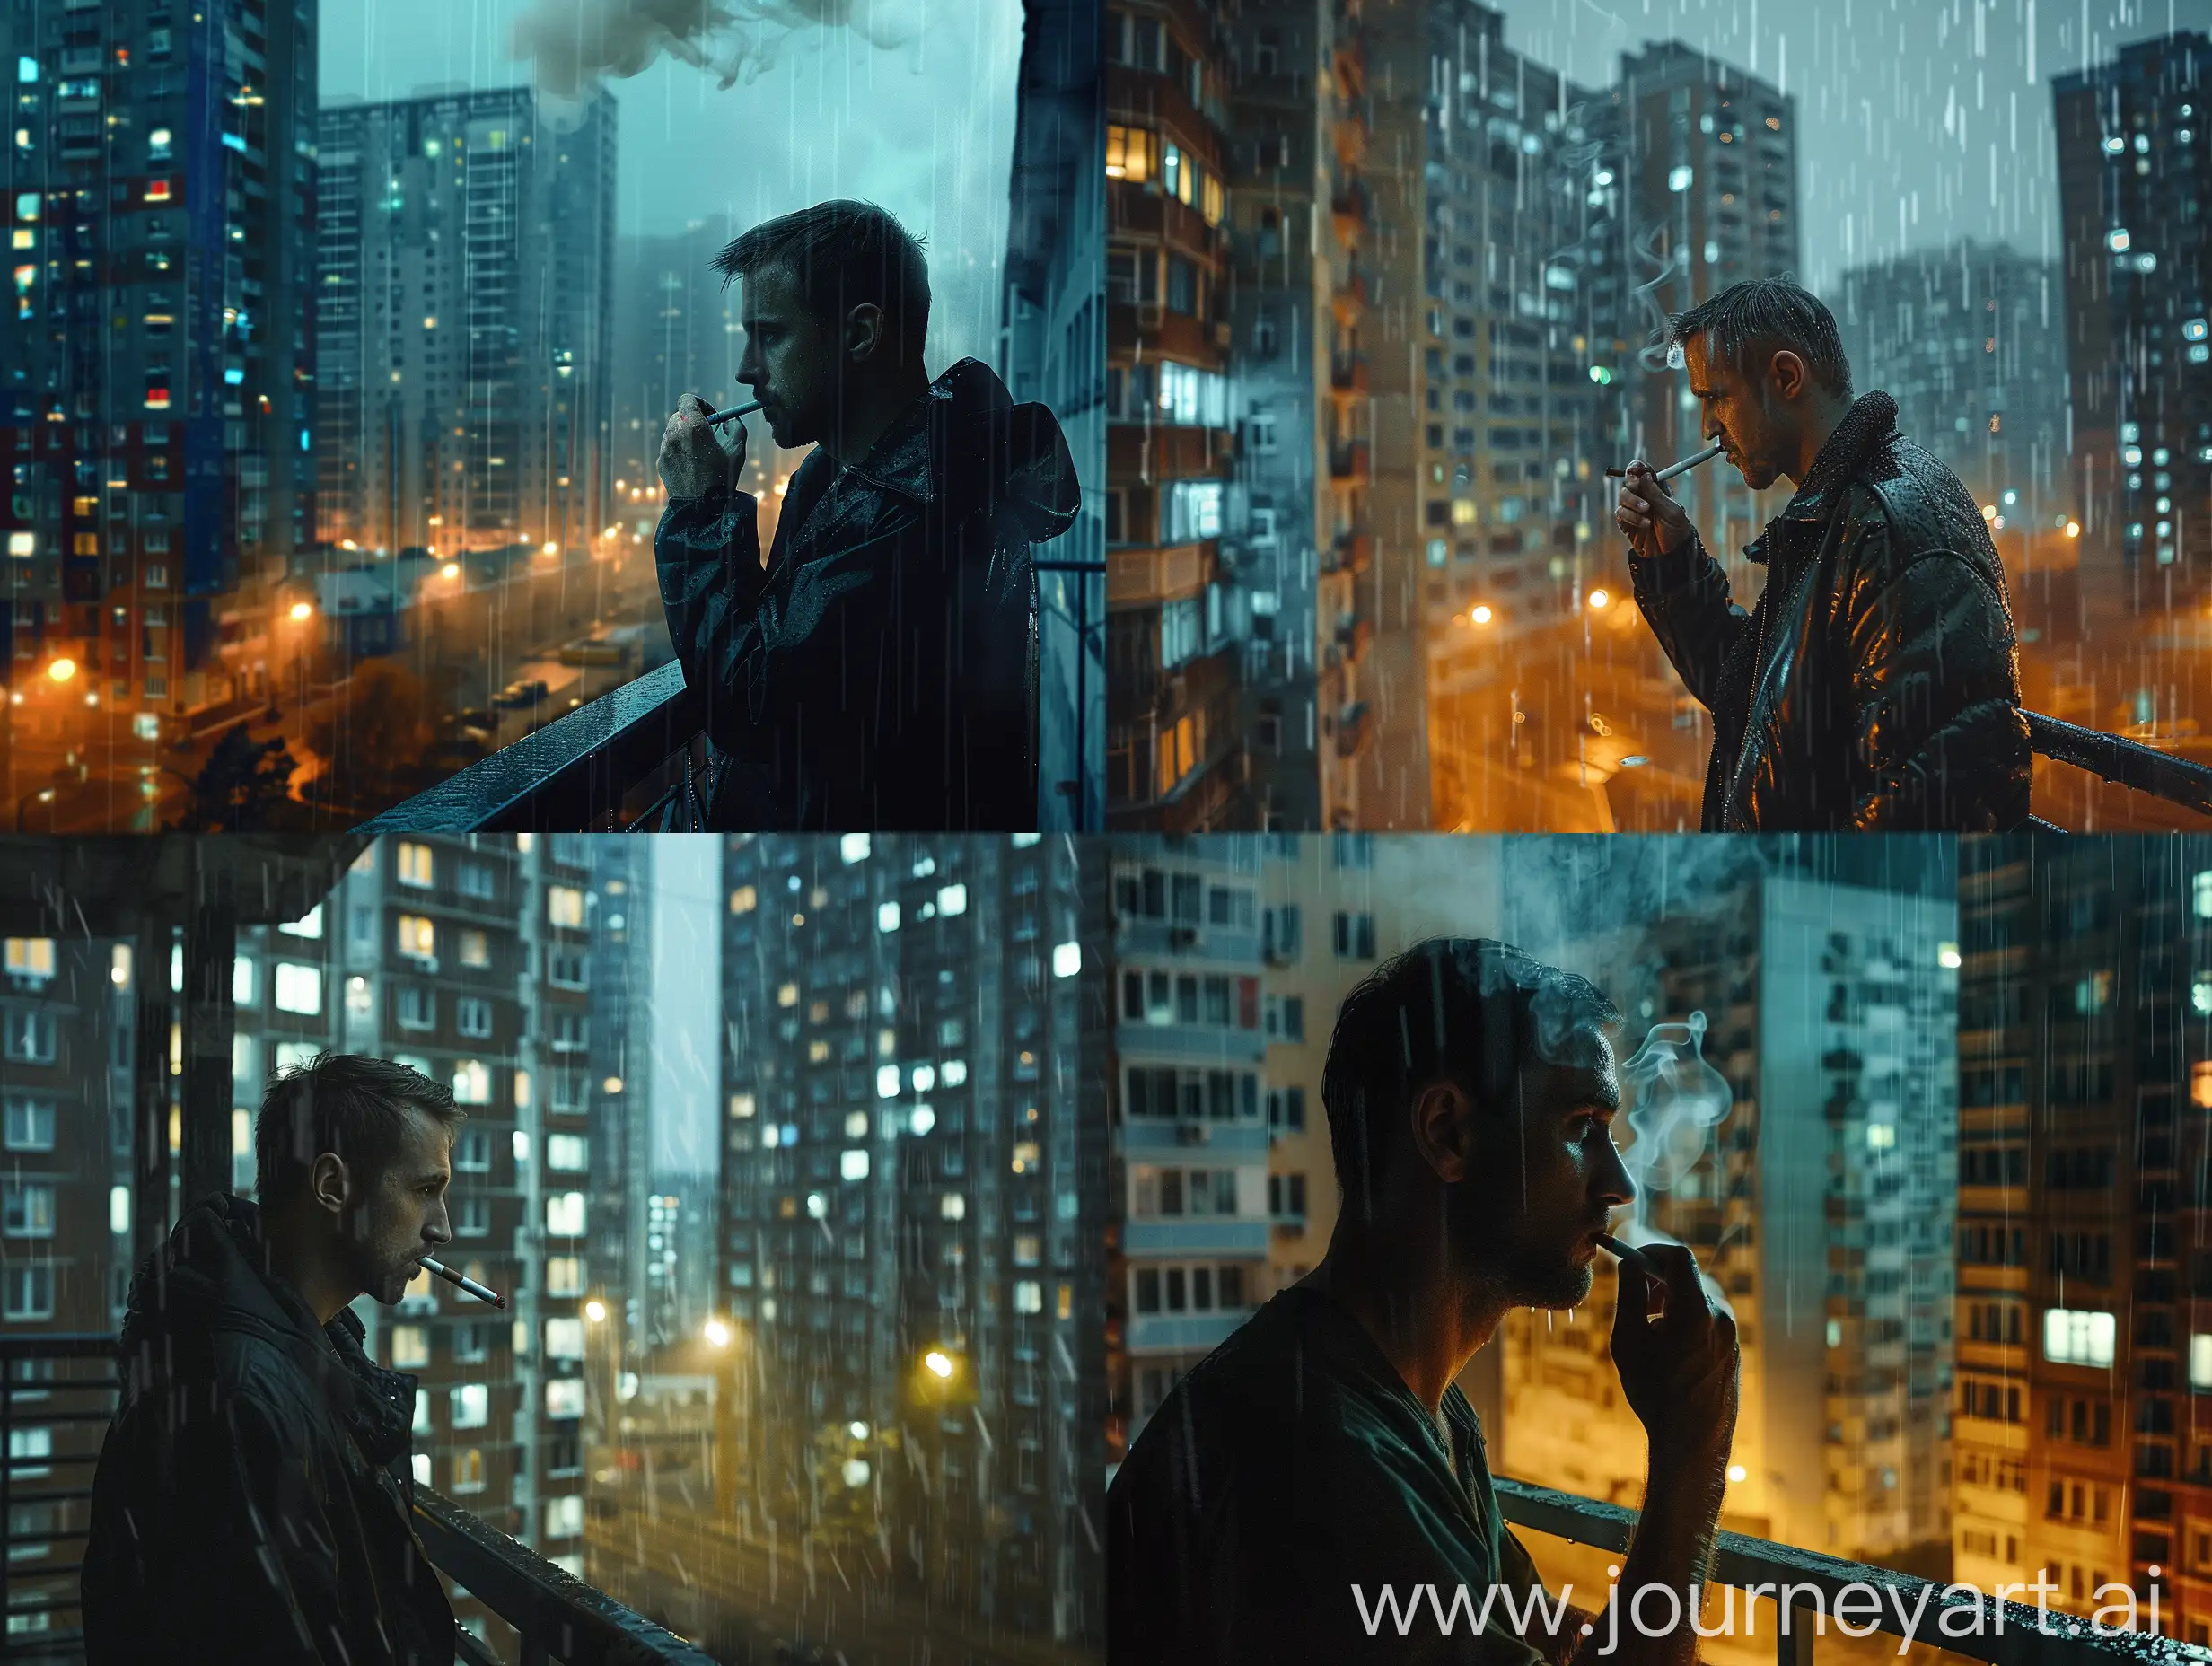 Ryan-Gosling-Smoking-on-Cyberpunk-Balcony-Overlooking-PostSoviet-HighRises